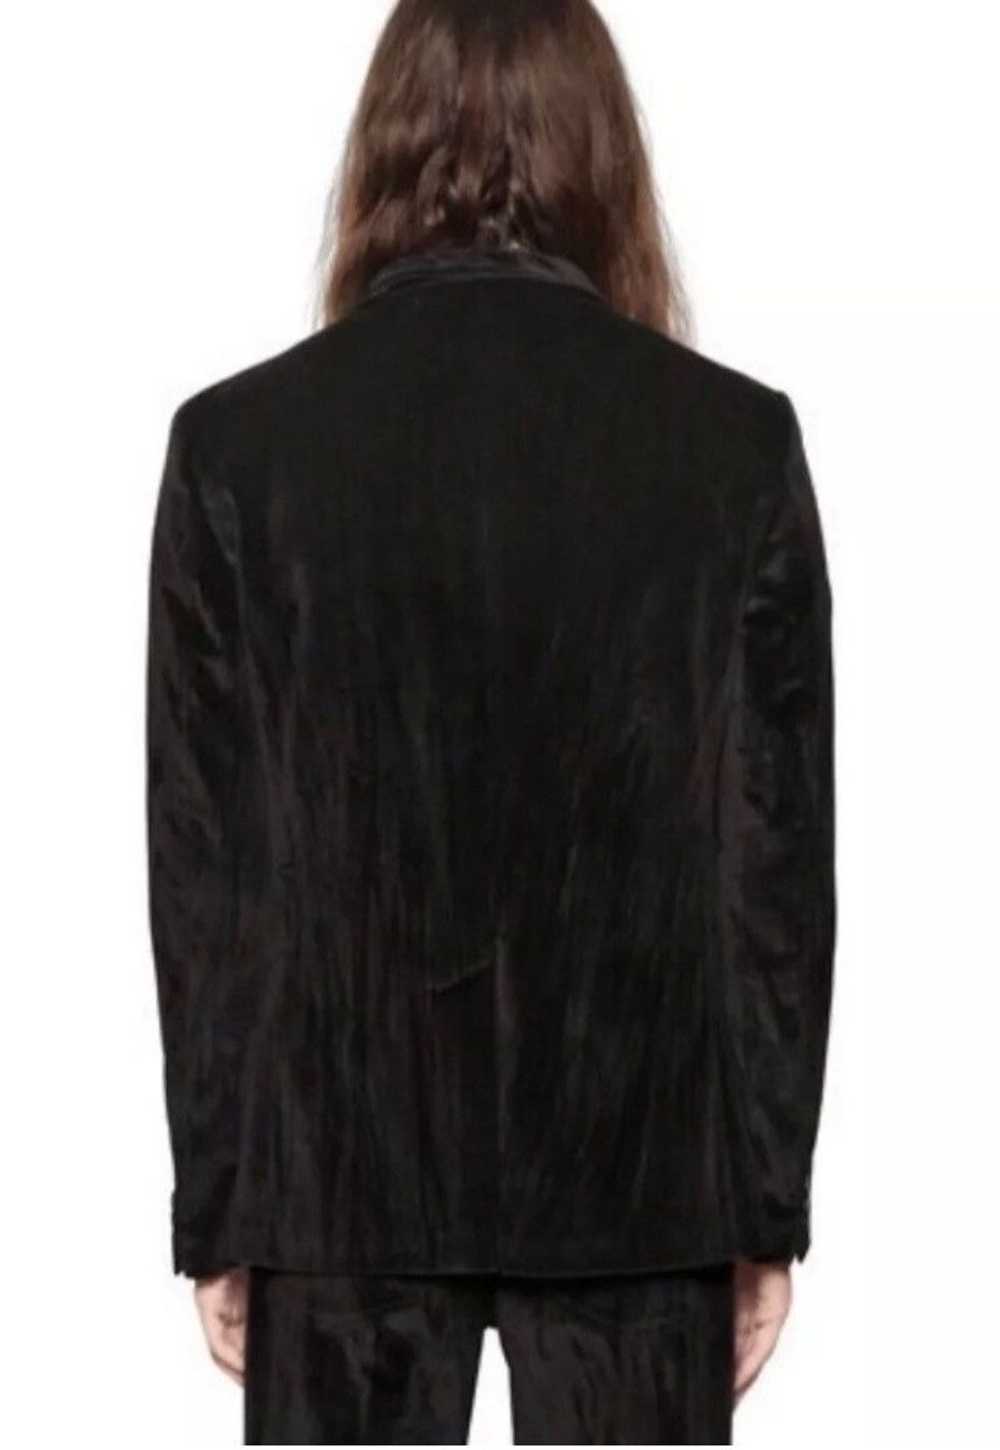 John Varvatos Crushed velvet jacket. Black. 50 - image 11